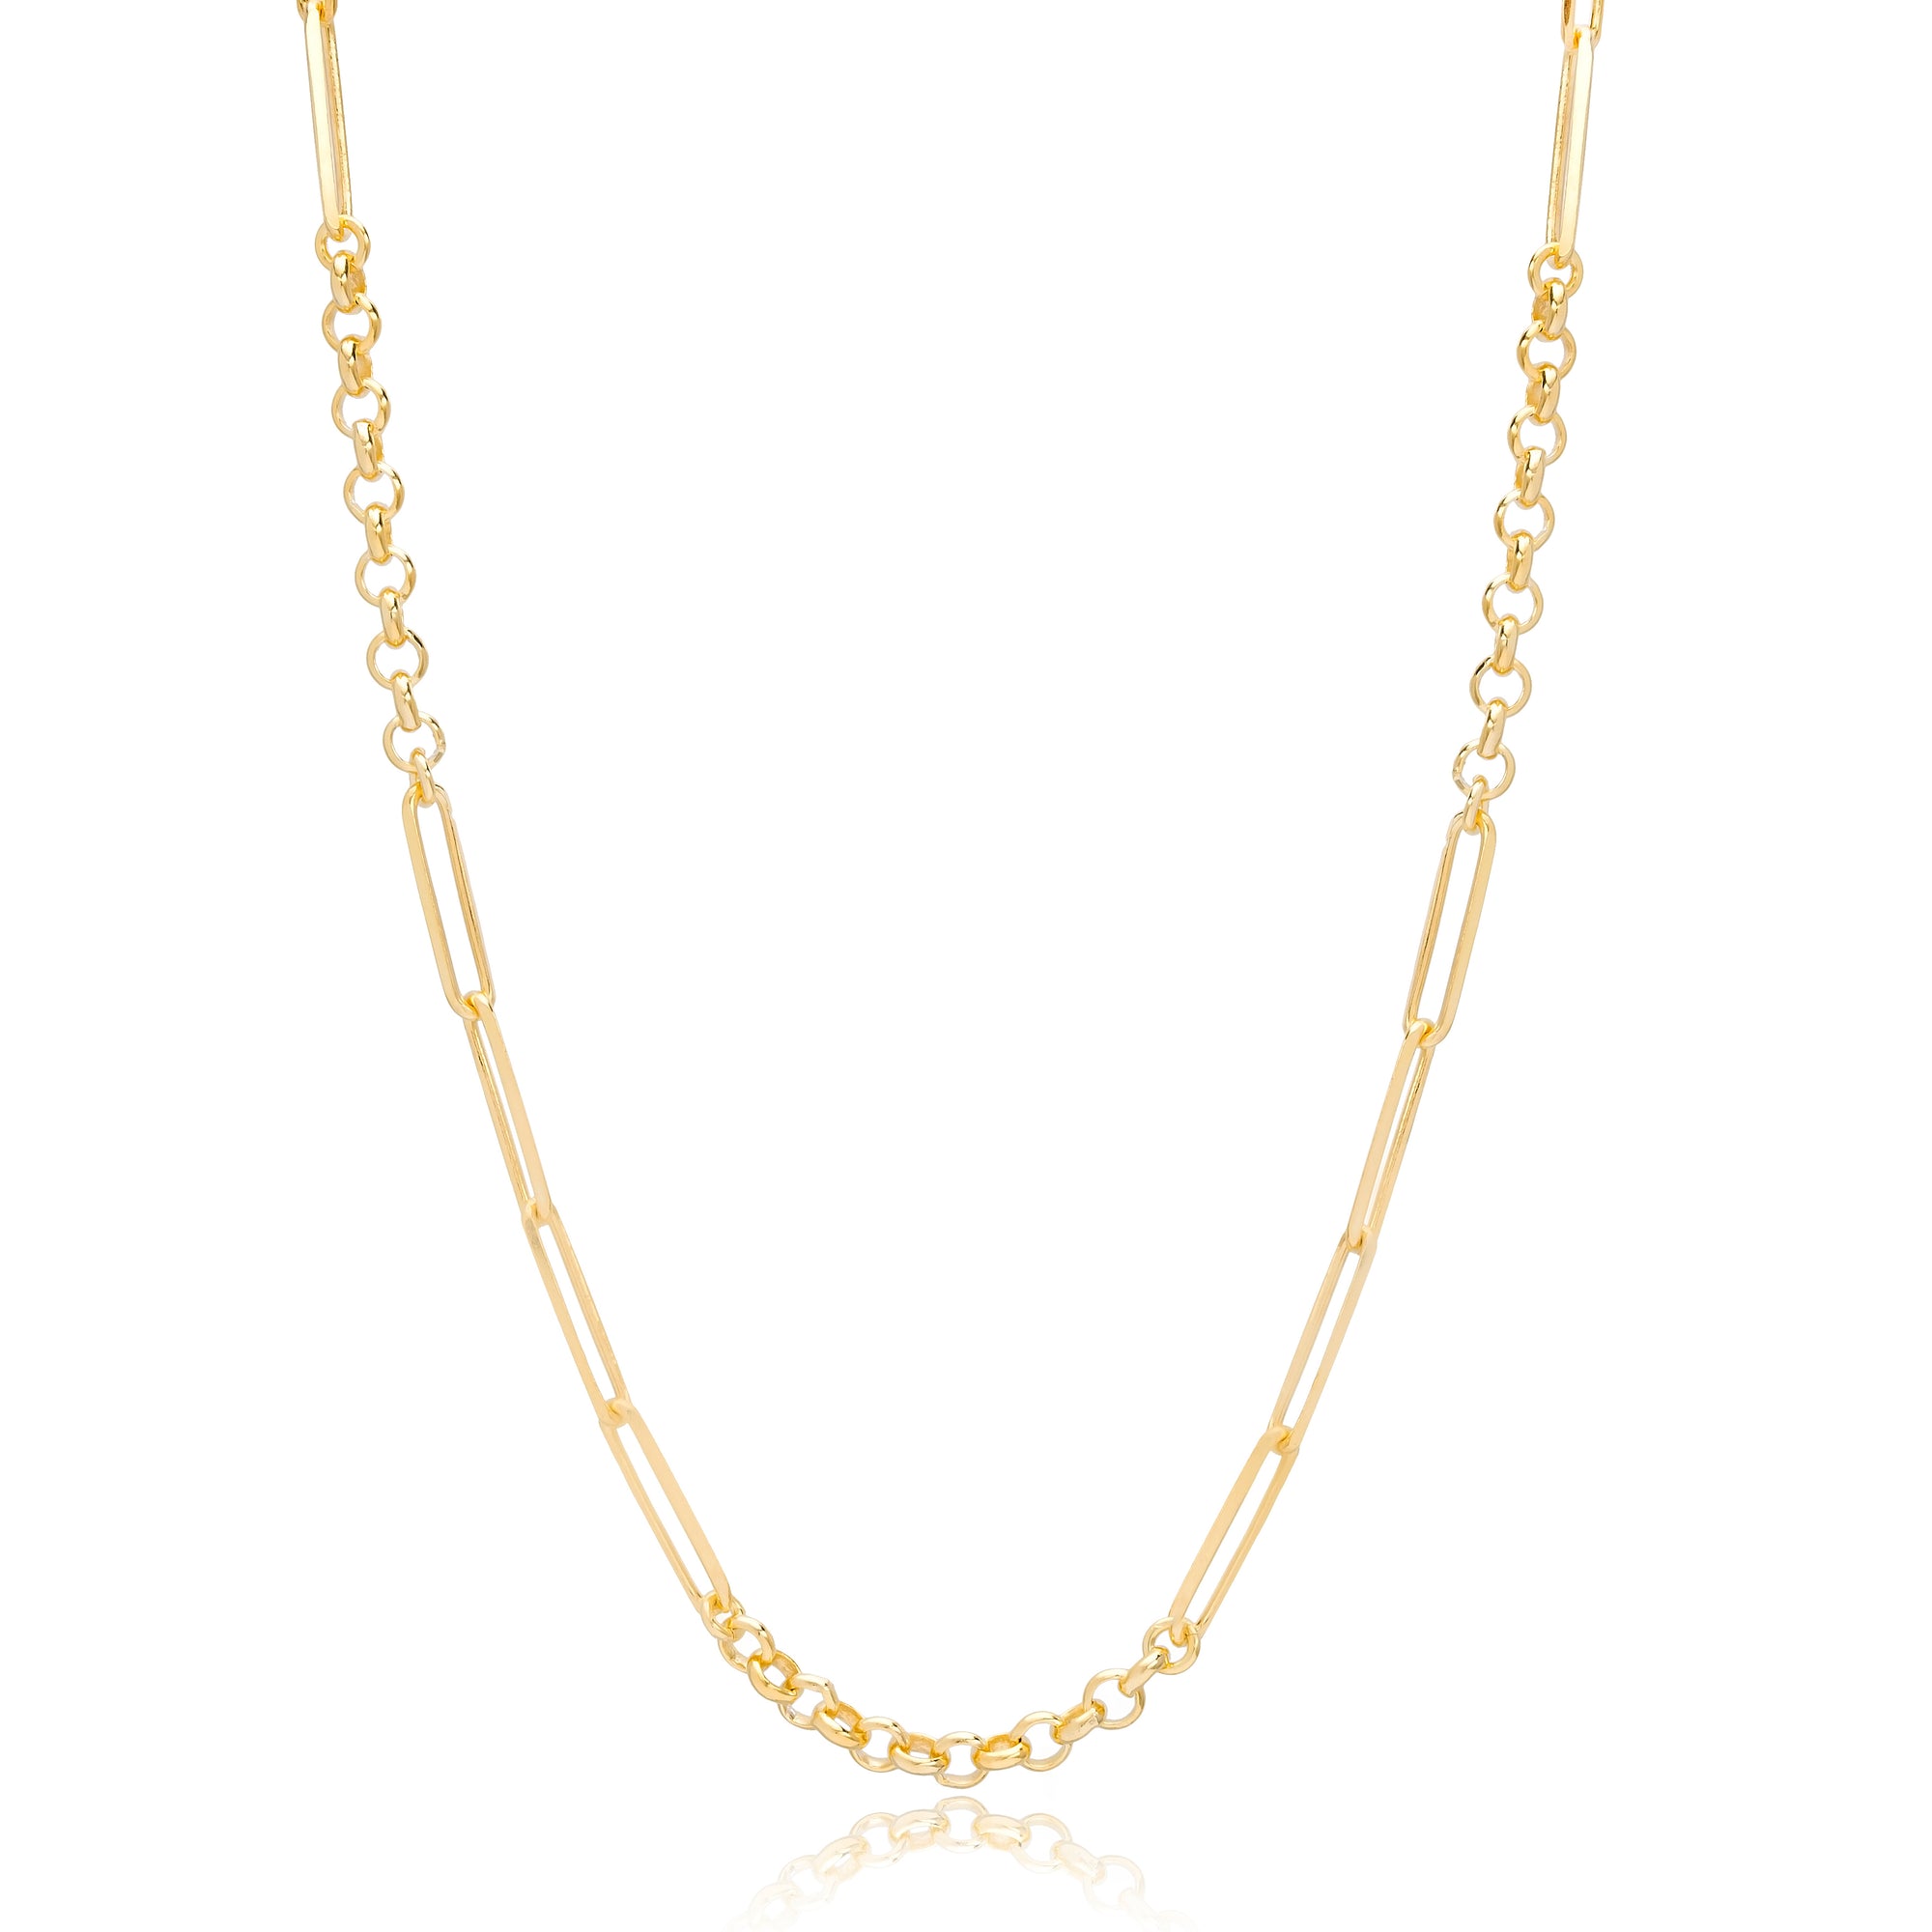 Hamilton Chain gold necklace stack